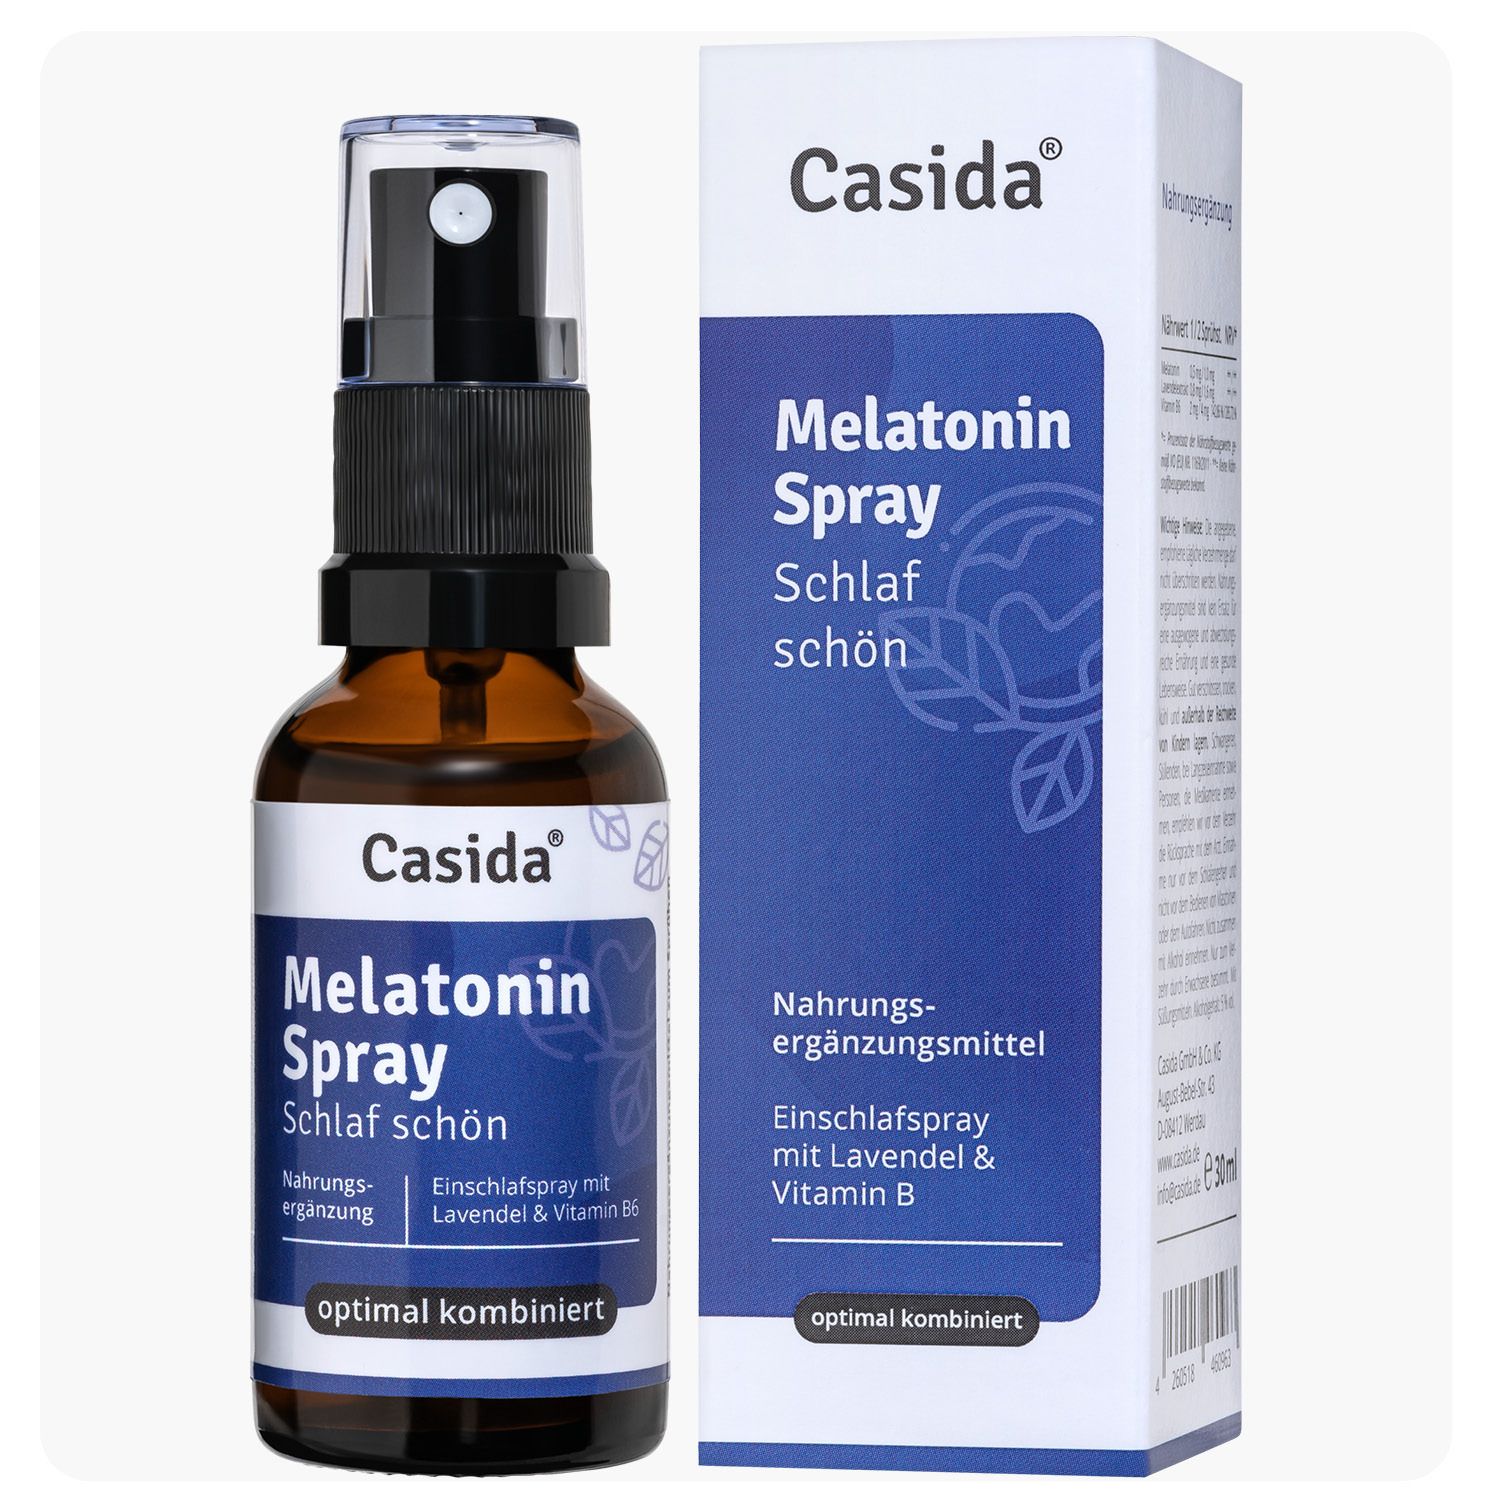 Casida® Melatonin Spray Schlaf schön